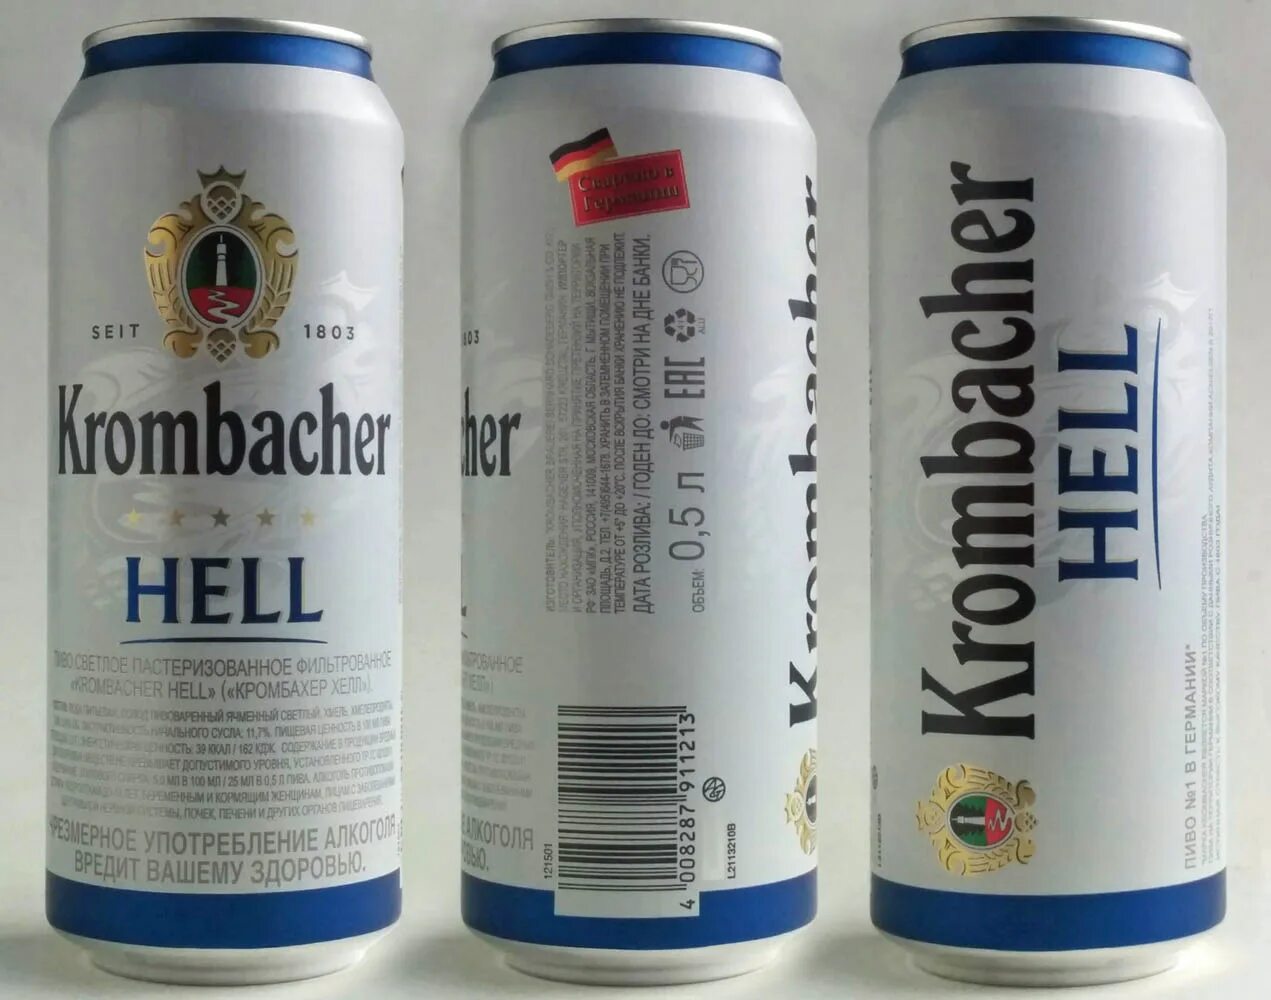 Hell пиво купить. Пиво Krombacher Hell. Пиво светлое Krombacher Hell 0.5 л. Krombacher Hell пиво светлое. Кромбахер Хелл пиво жб.